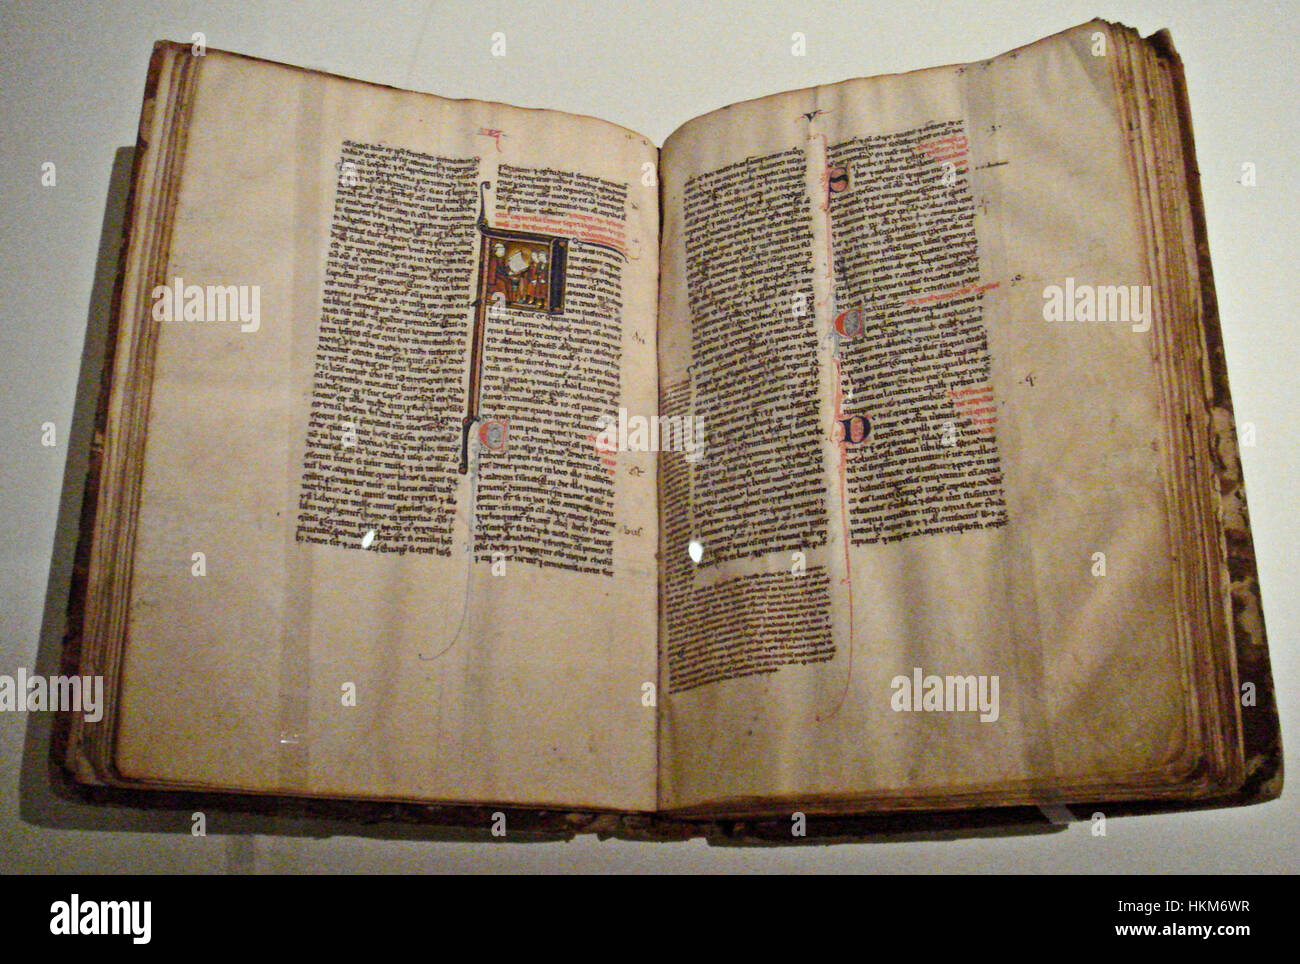 Al Rhazes Receuil de Traite de medecine tradotto da Gerard de cremonese seconda metà del XIII secolo Foto Stock